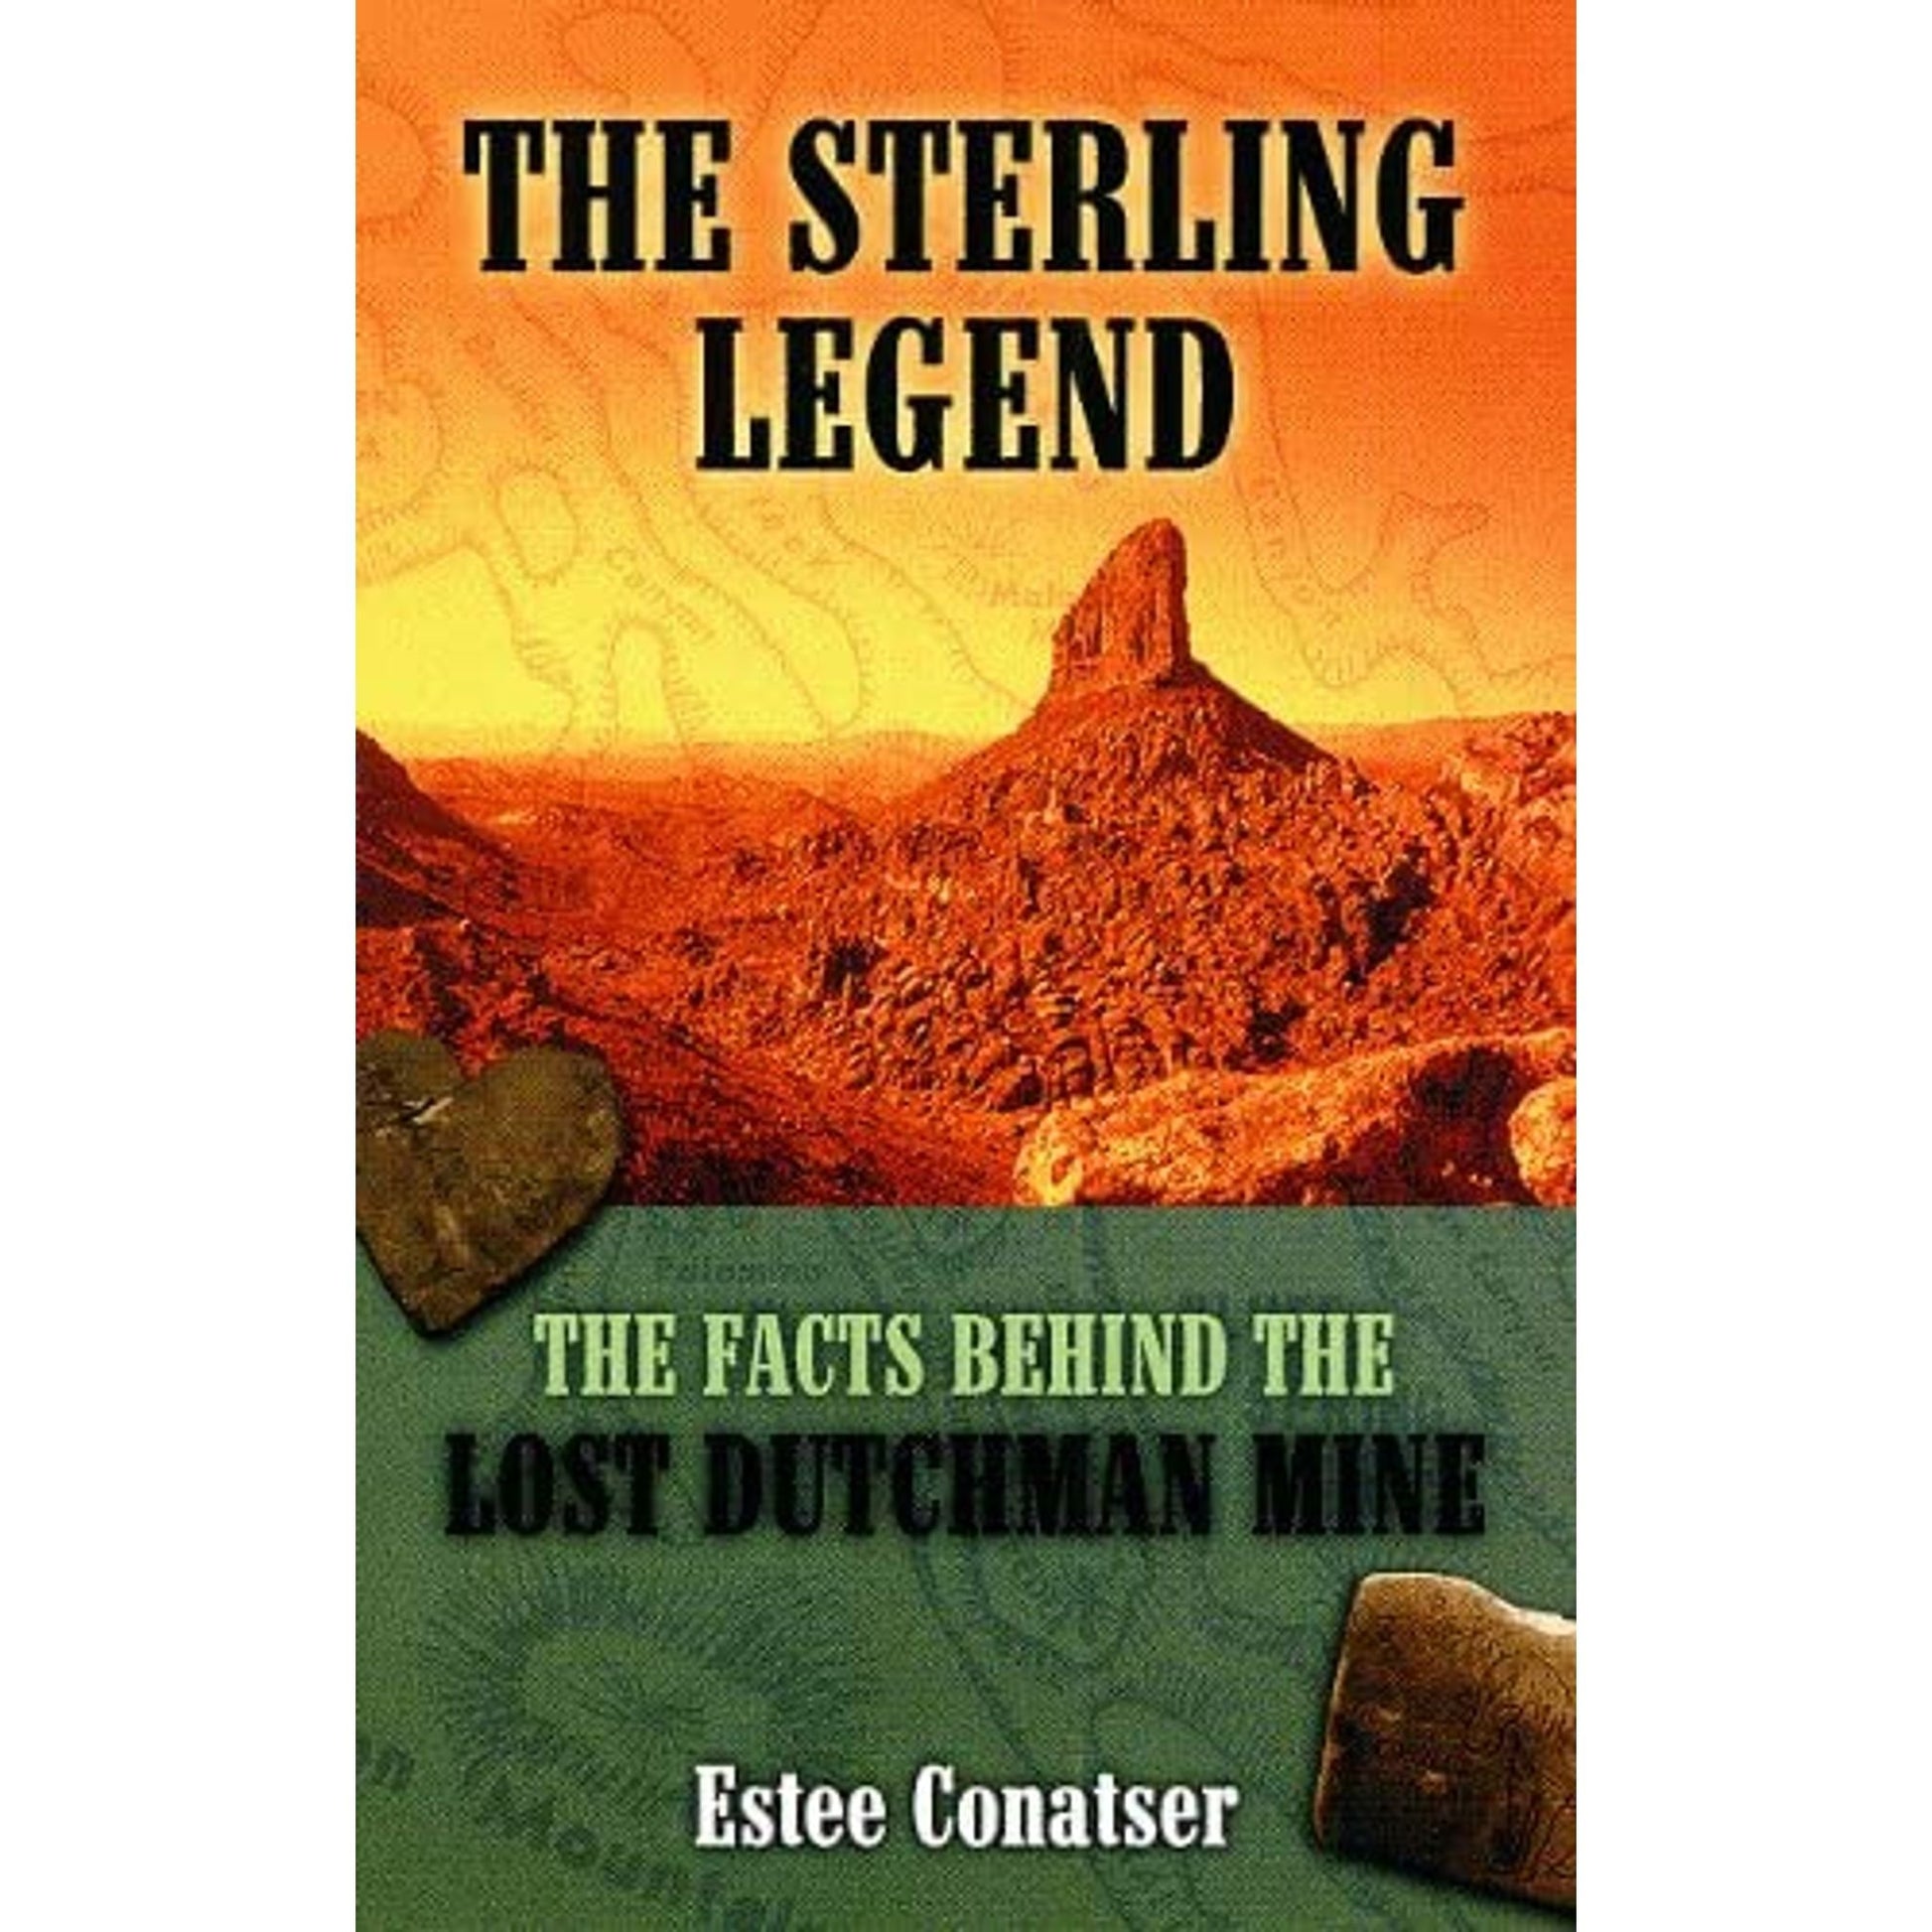 The Sterling Legend; Lost Dutchman Mine